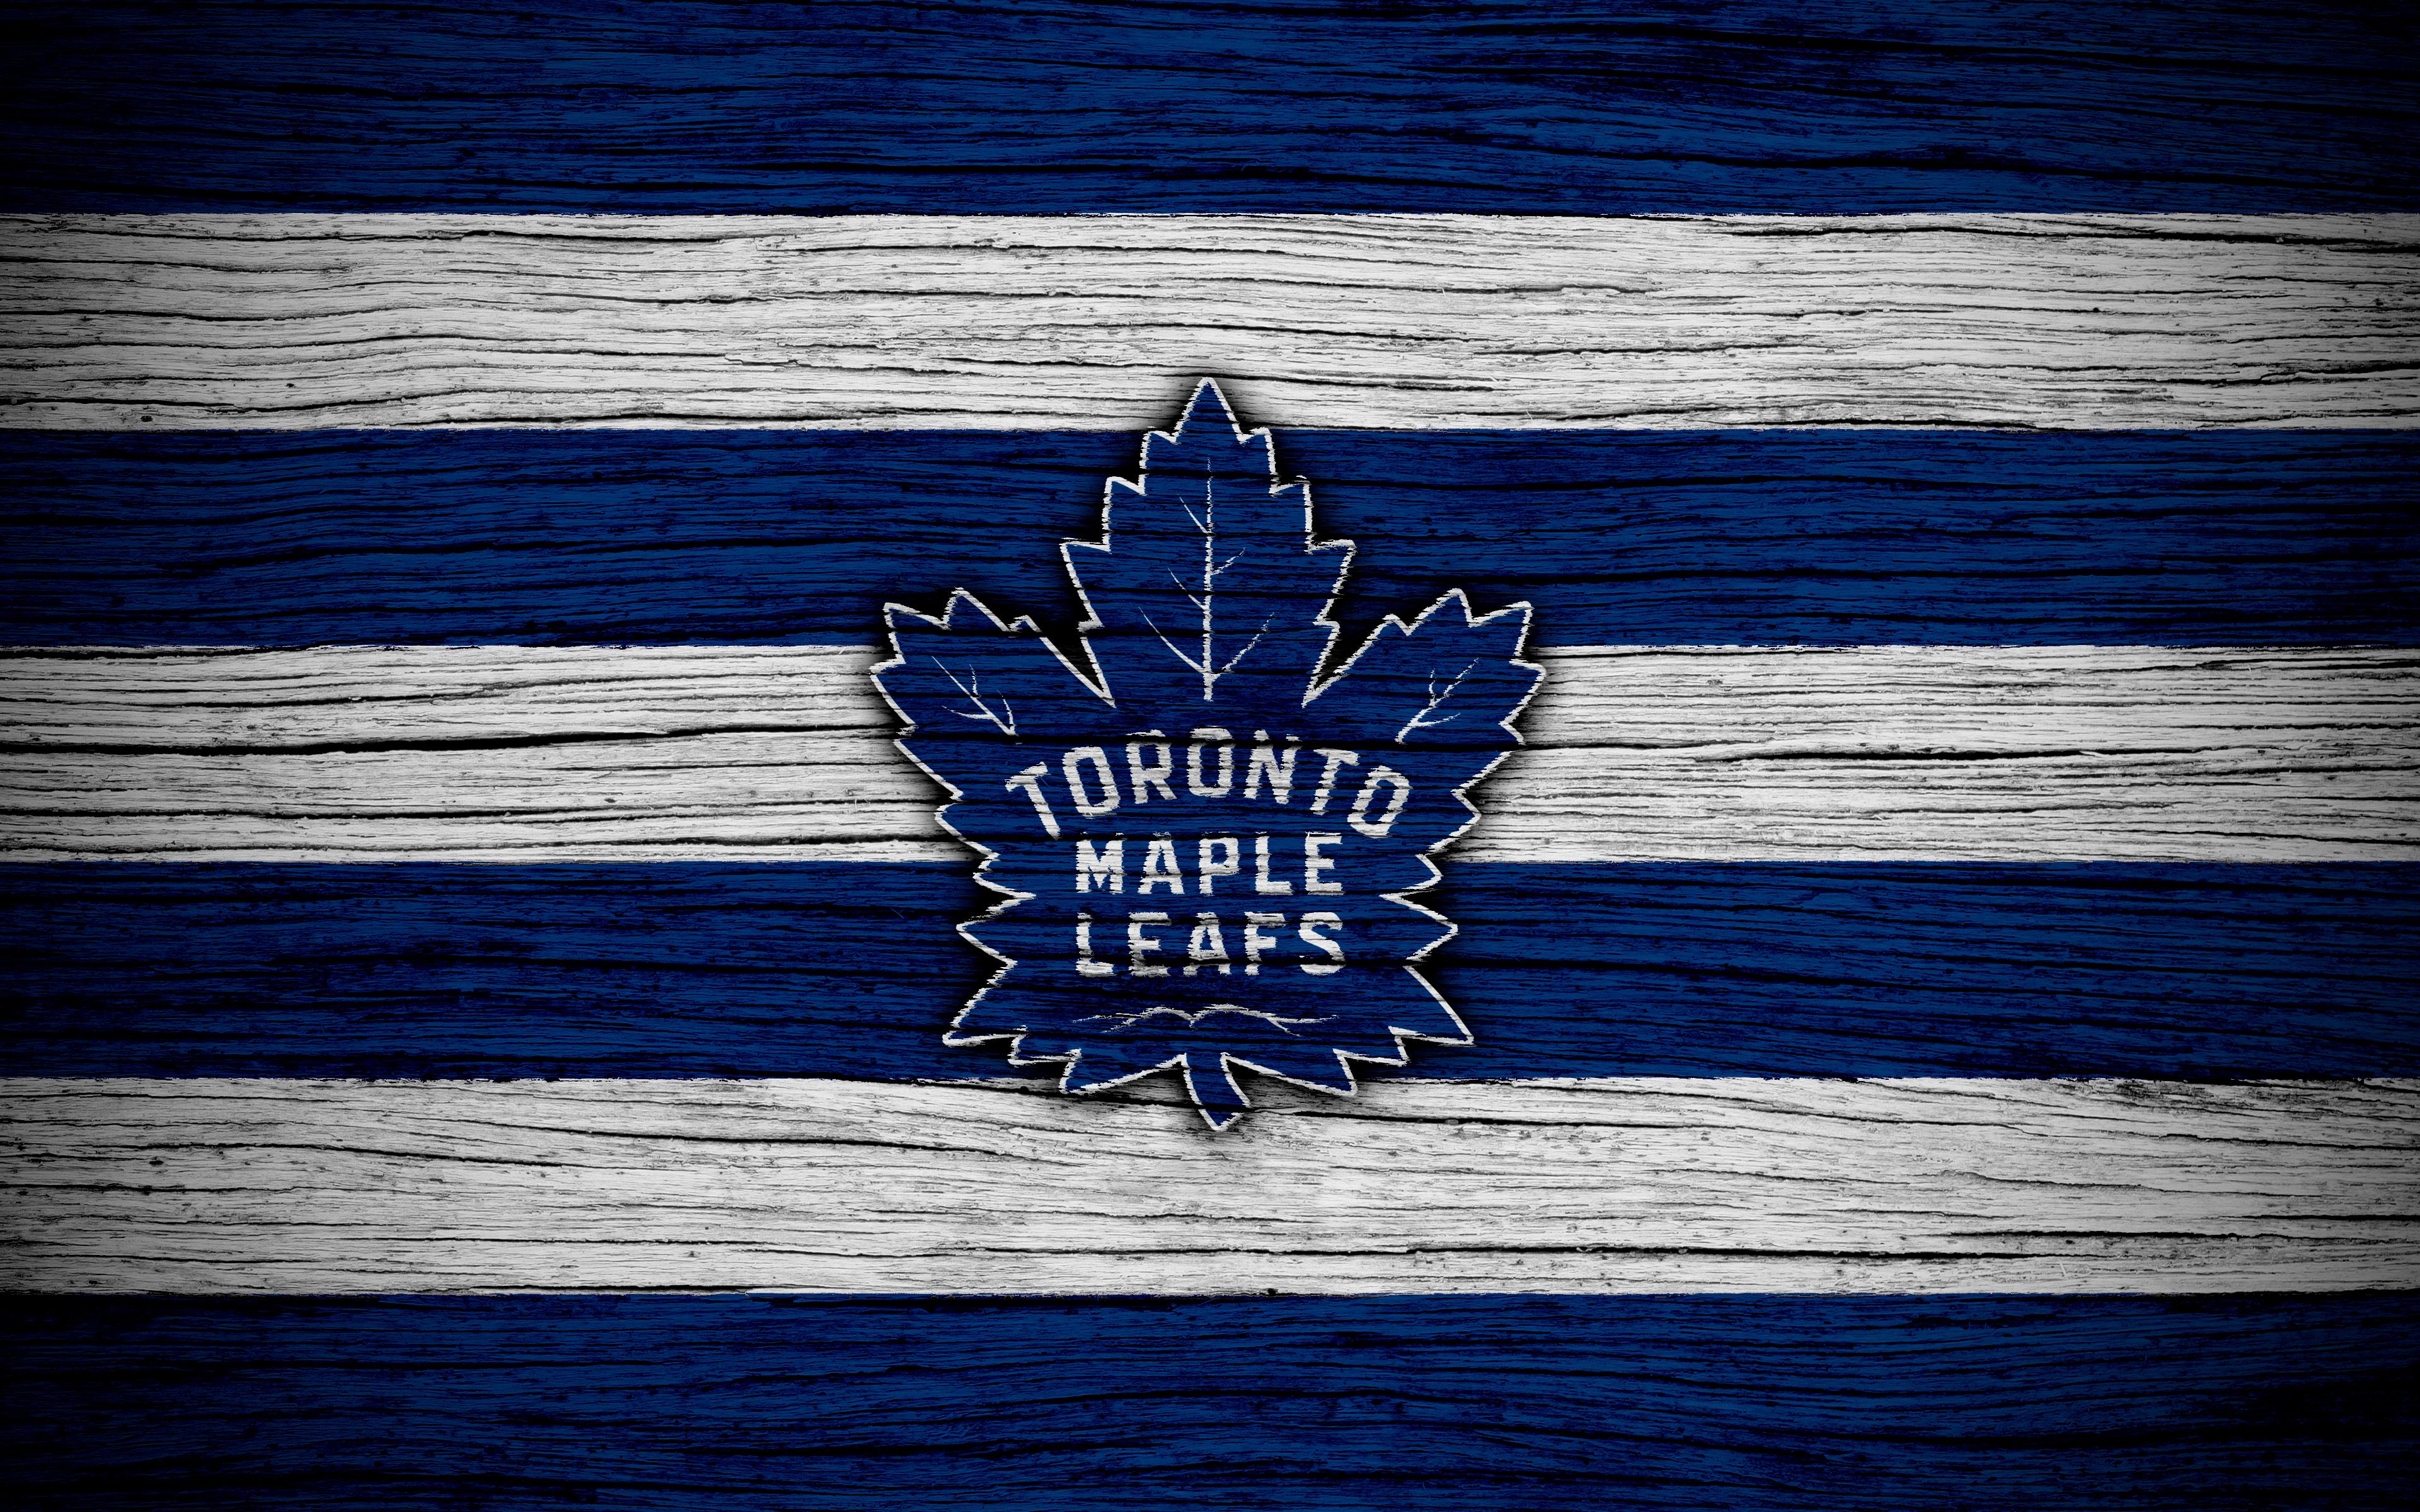 Toronto Maple Leafs 4k Ultra HD Wallpaper. Background Image